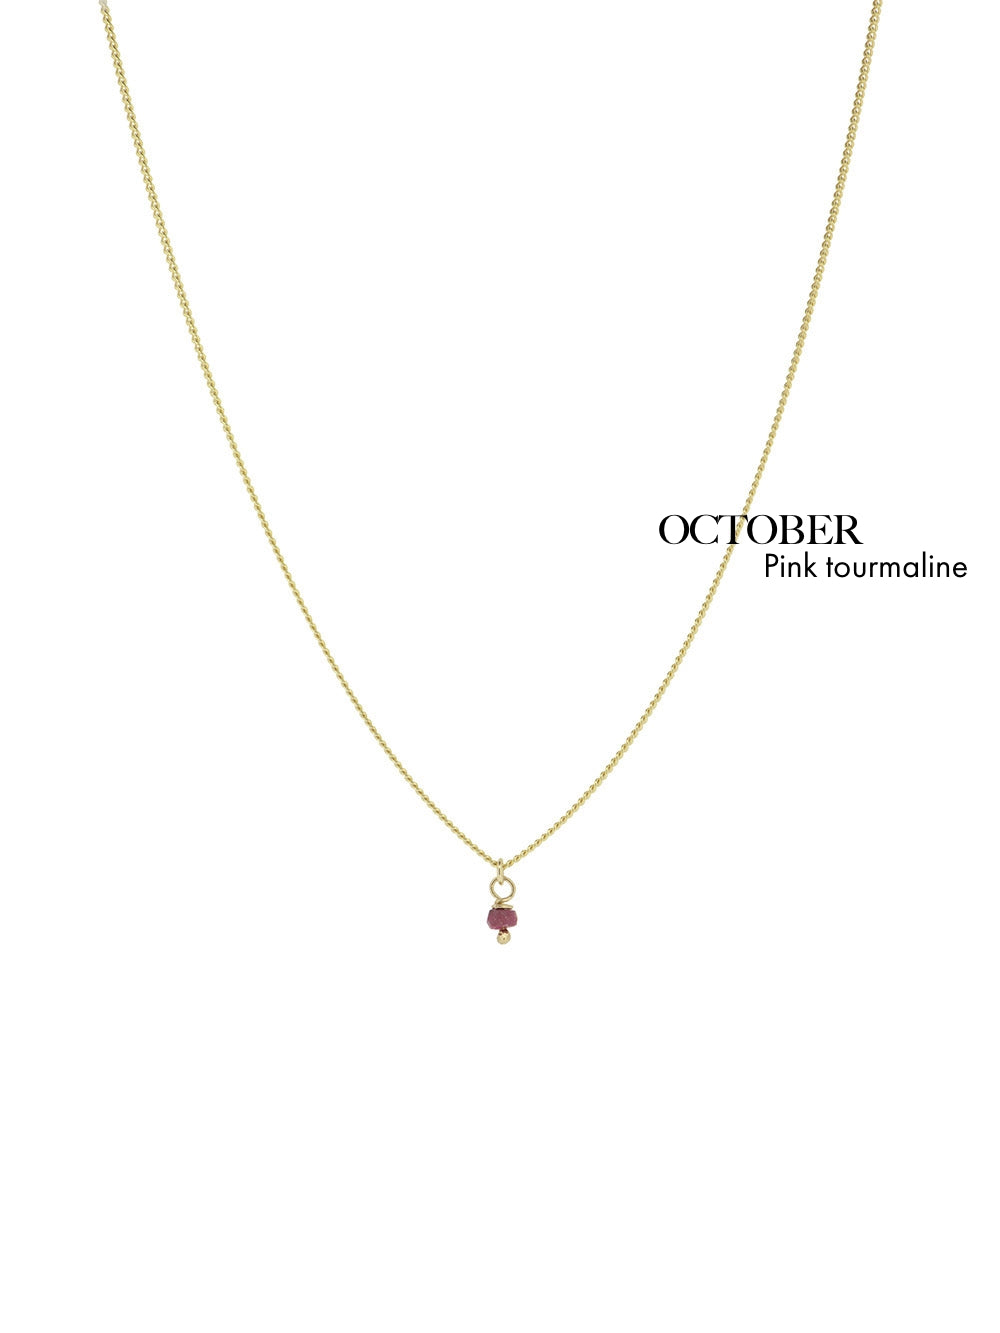 Birthstone October - Pink Tourmaline | 14K Gold Plated